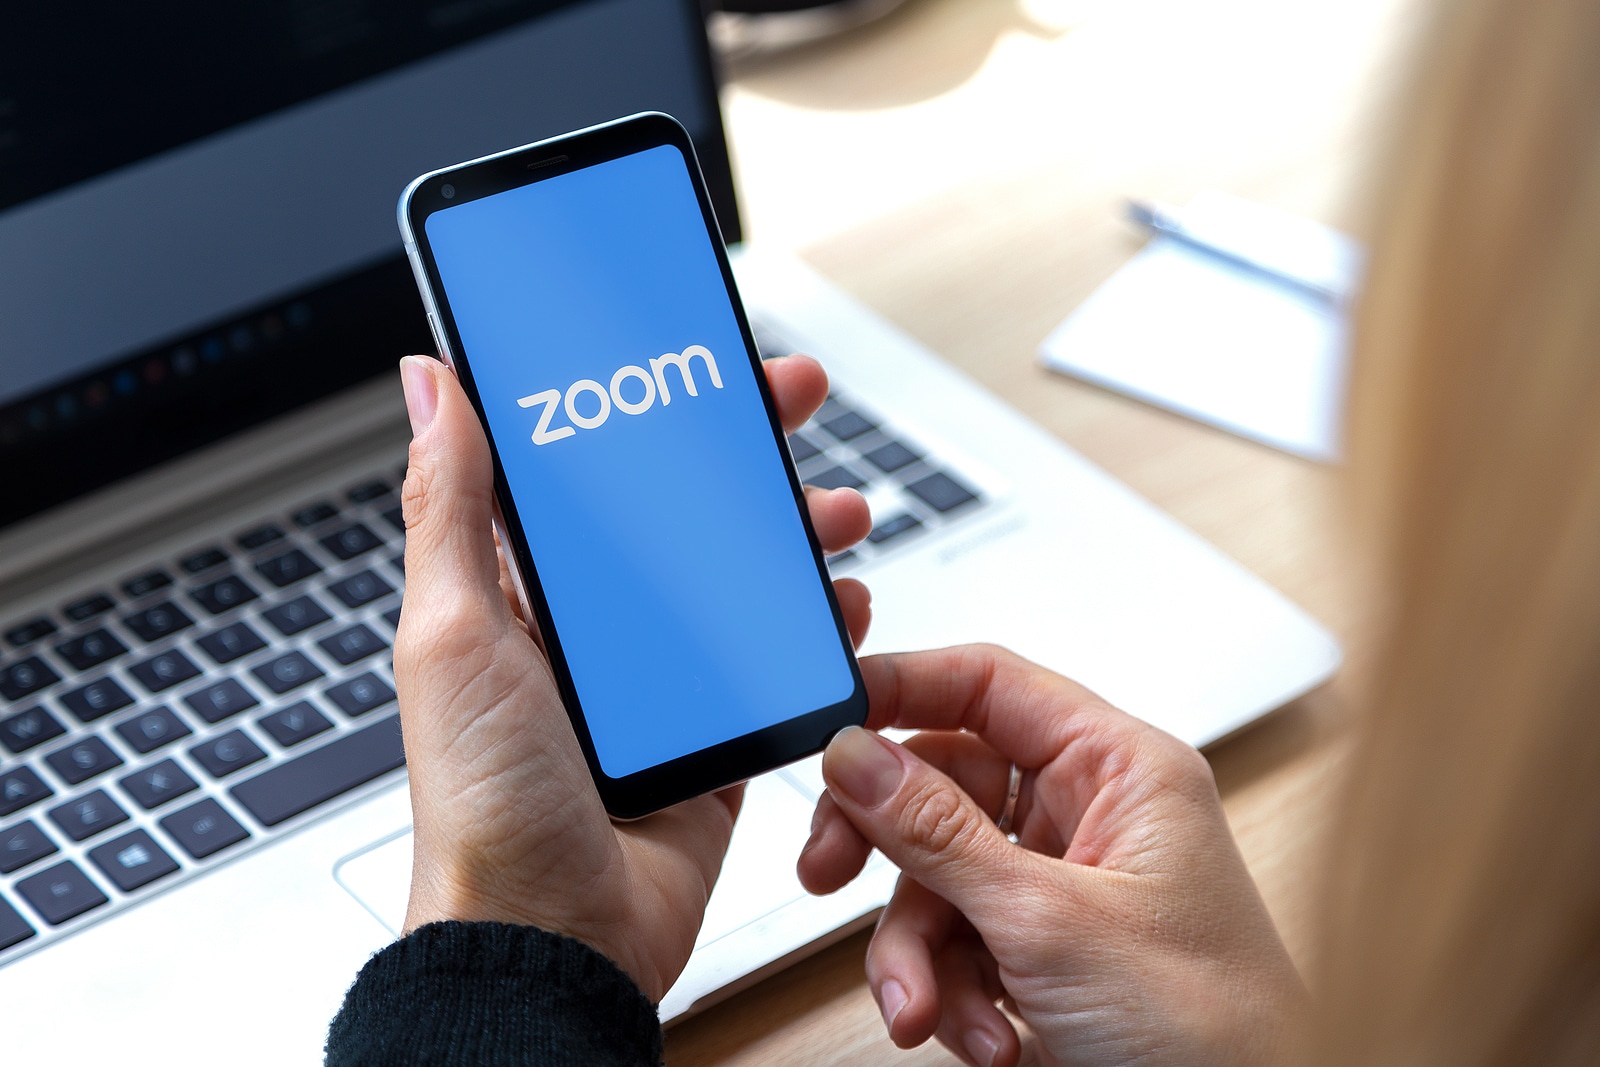 Zoom logo on mobile phone screen